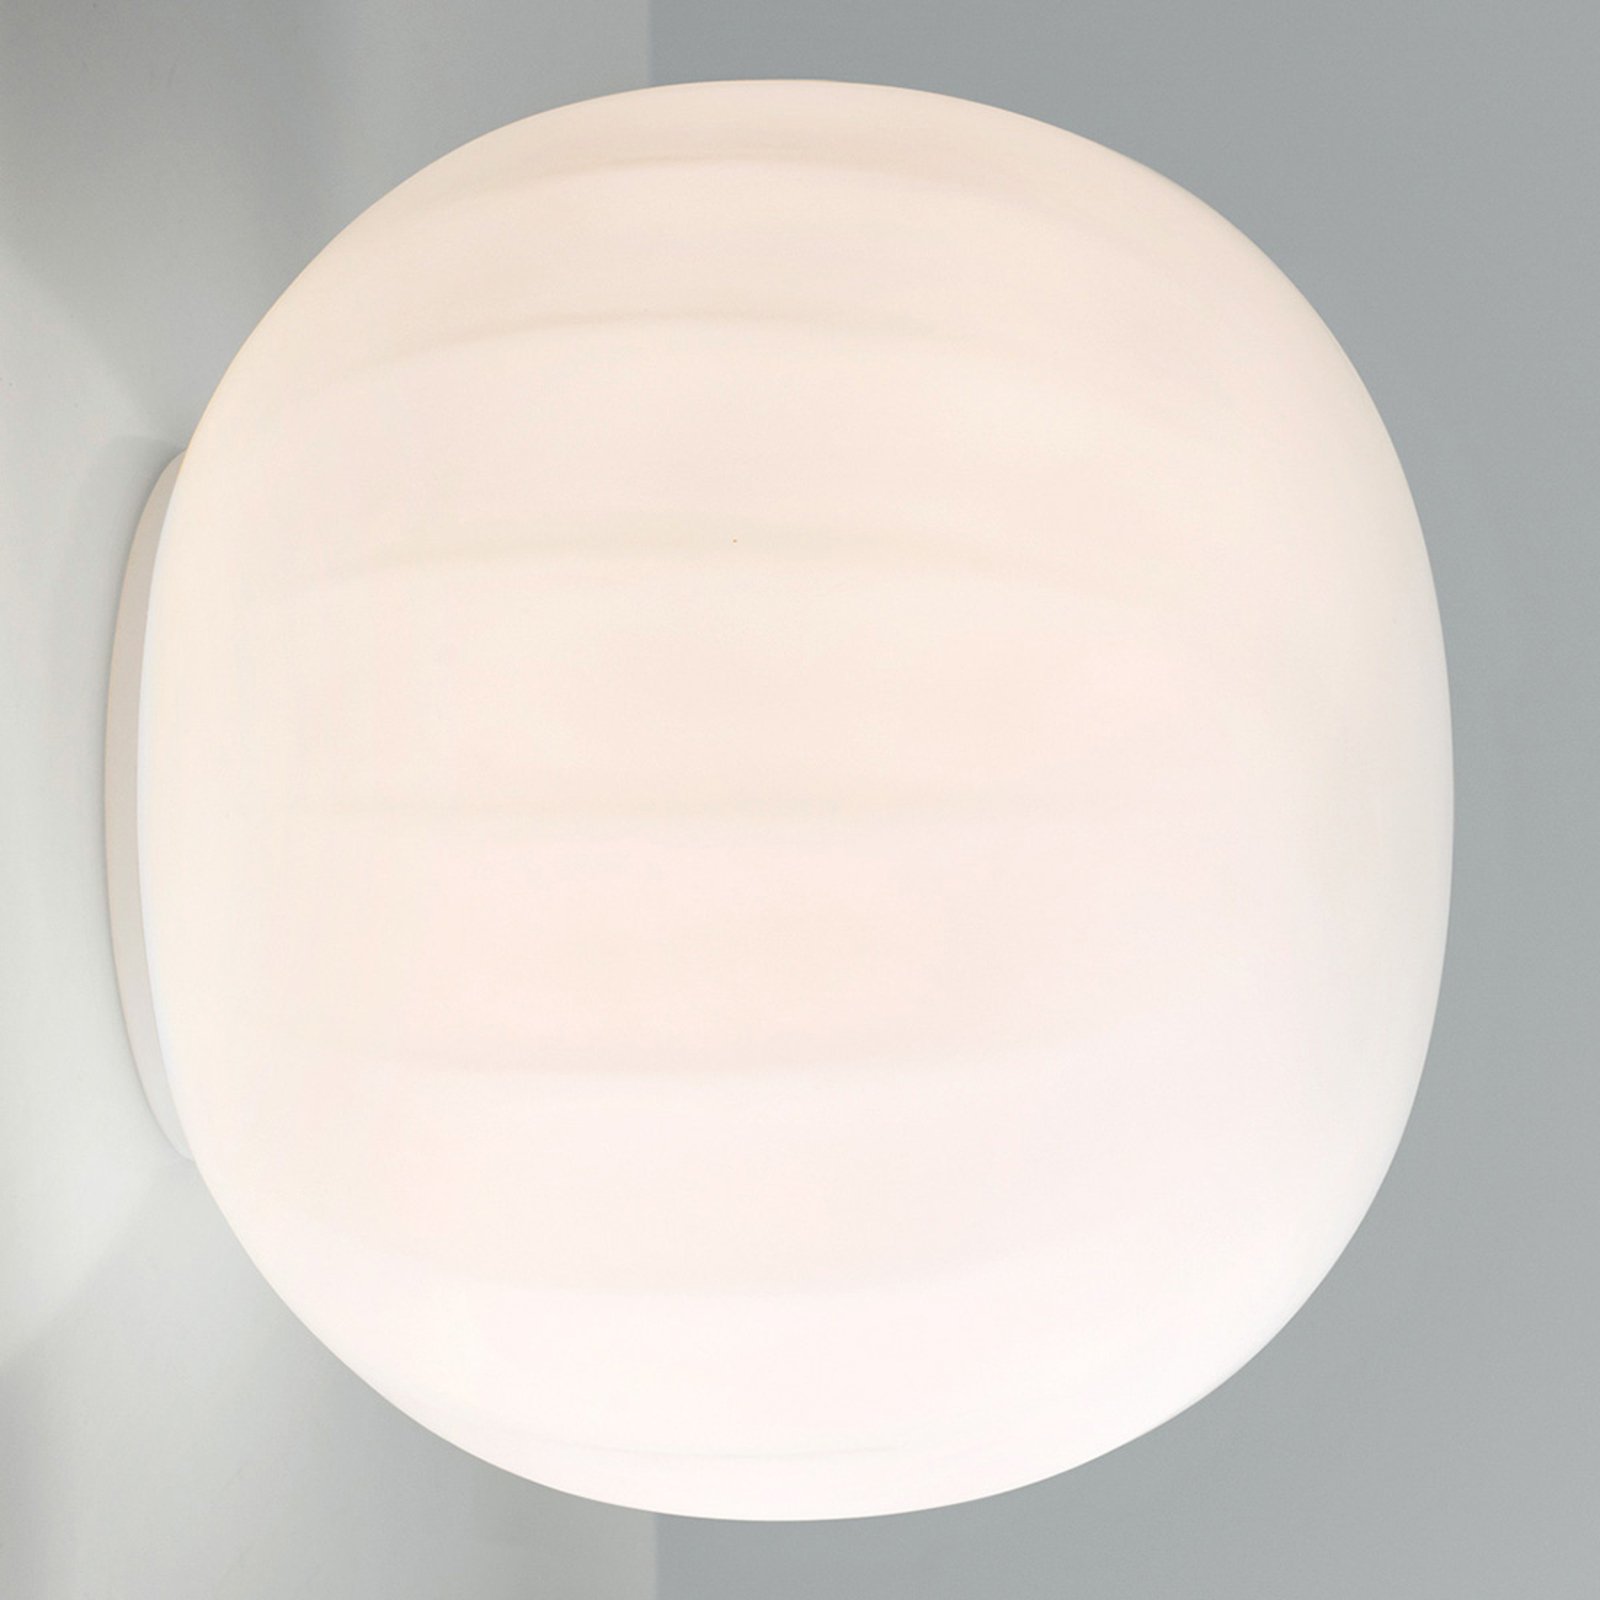 Luceplan Lita wall lamp 30 cm diameter